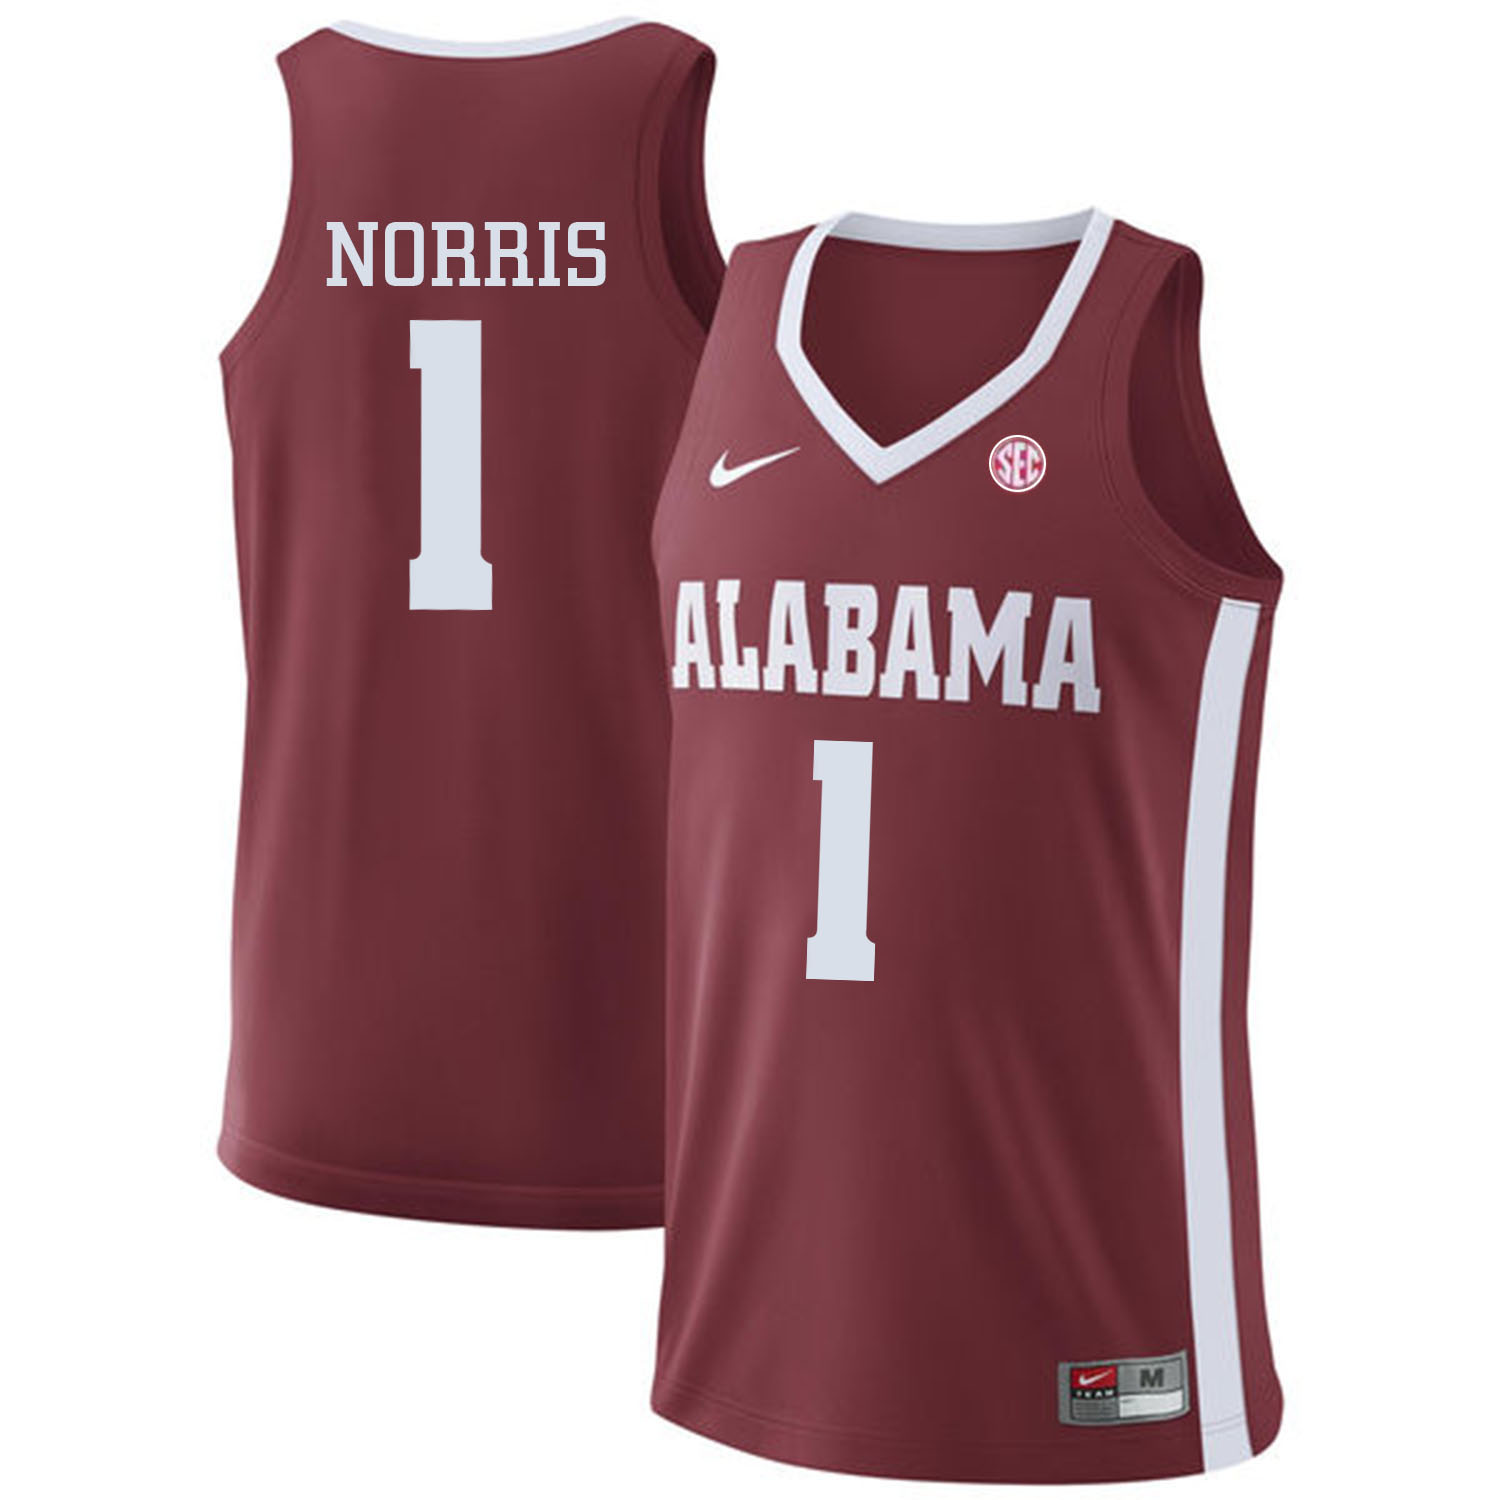 Alabama Crimson Tide 1 Riley Norris Red College Basketball Jersey